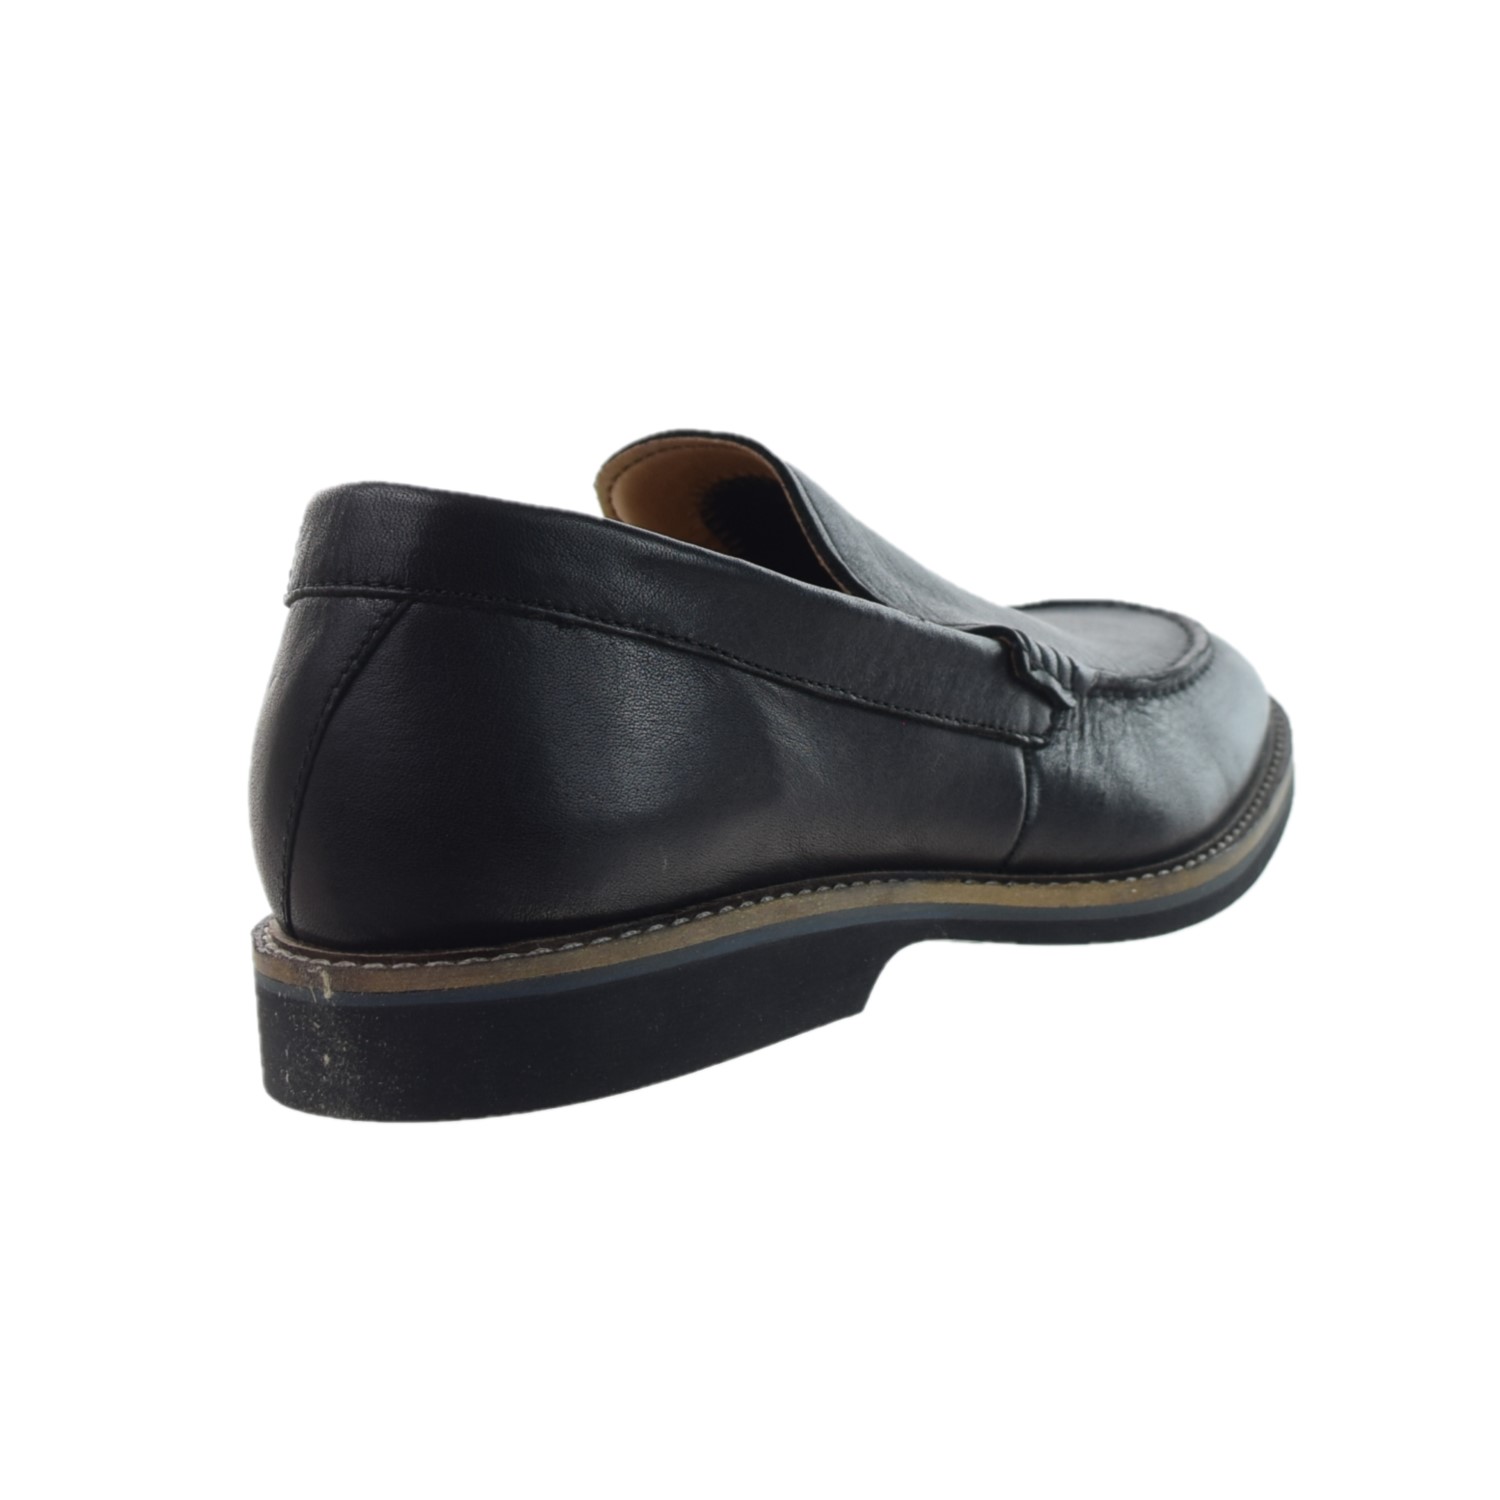 Clarks Atticus Edge Men's Slip-On Loafers Black Leather 26148221 | eBay